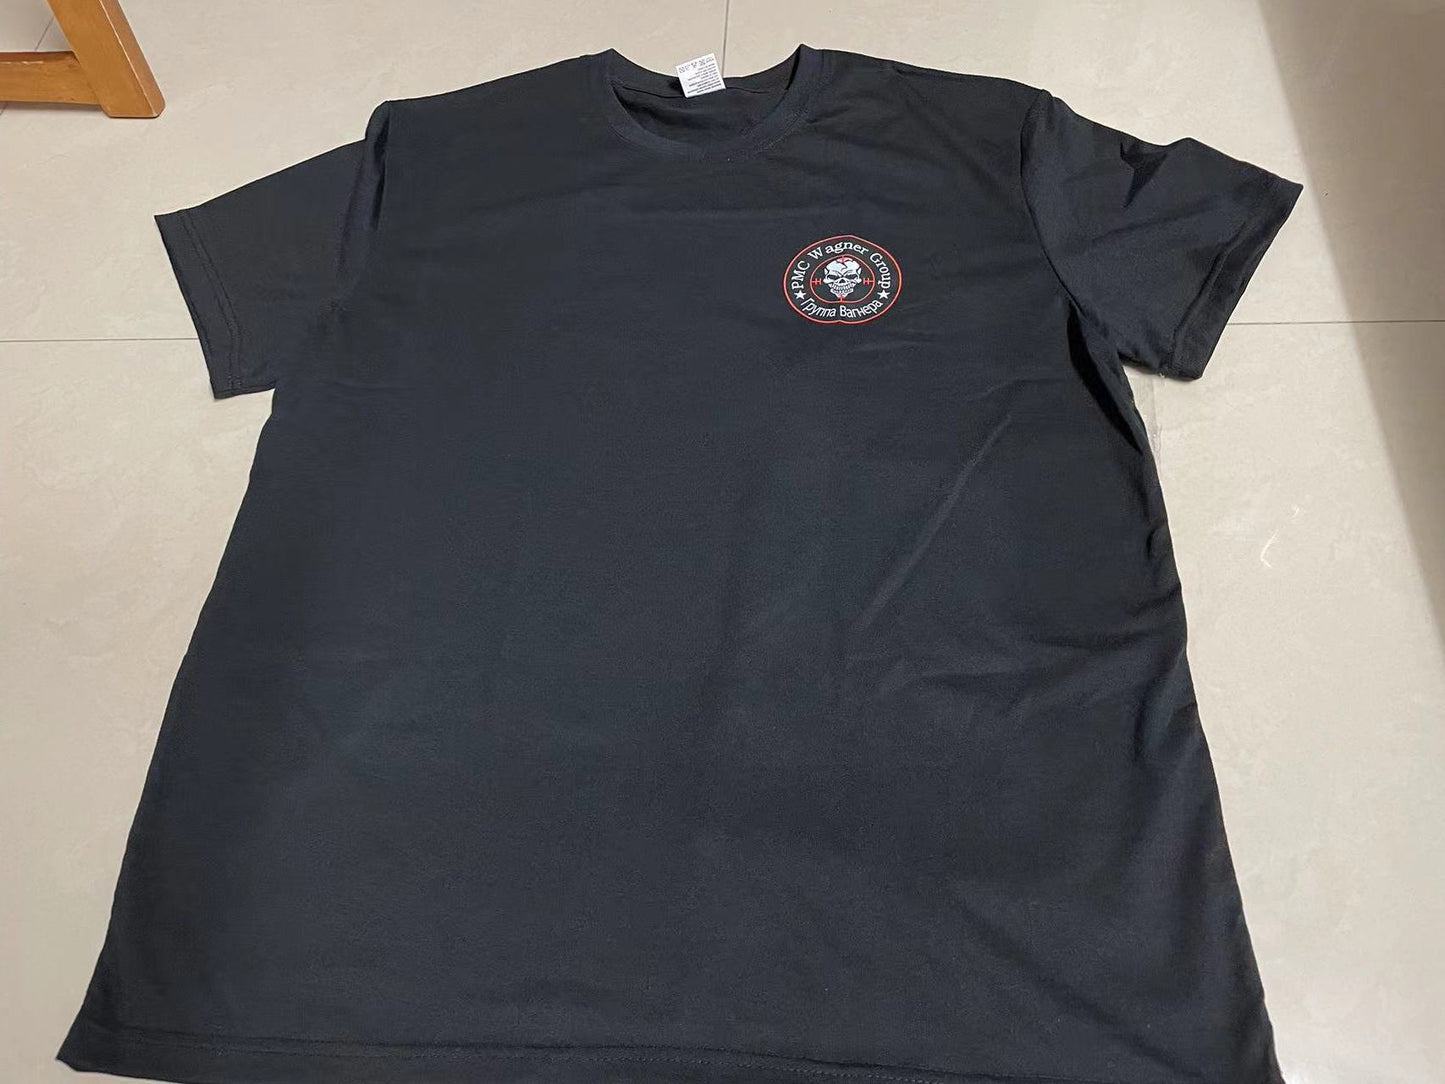 Wagner PMC- ЧВК Вагнер Short Sleeve T-Shirt